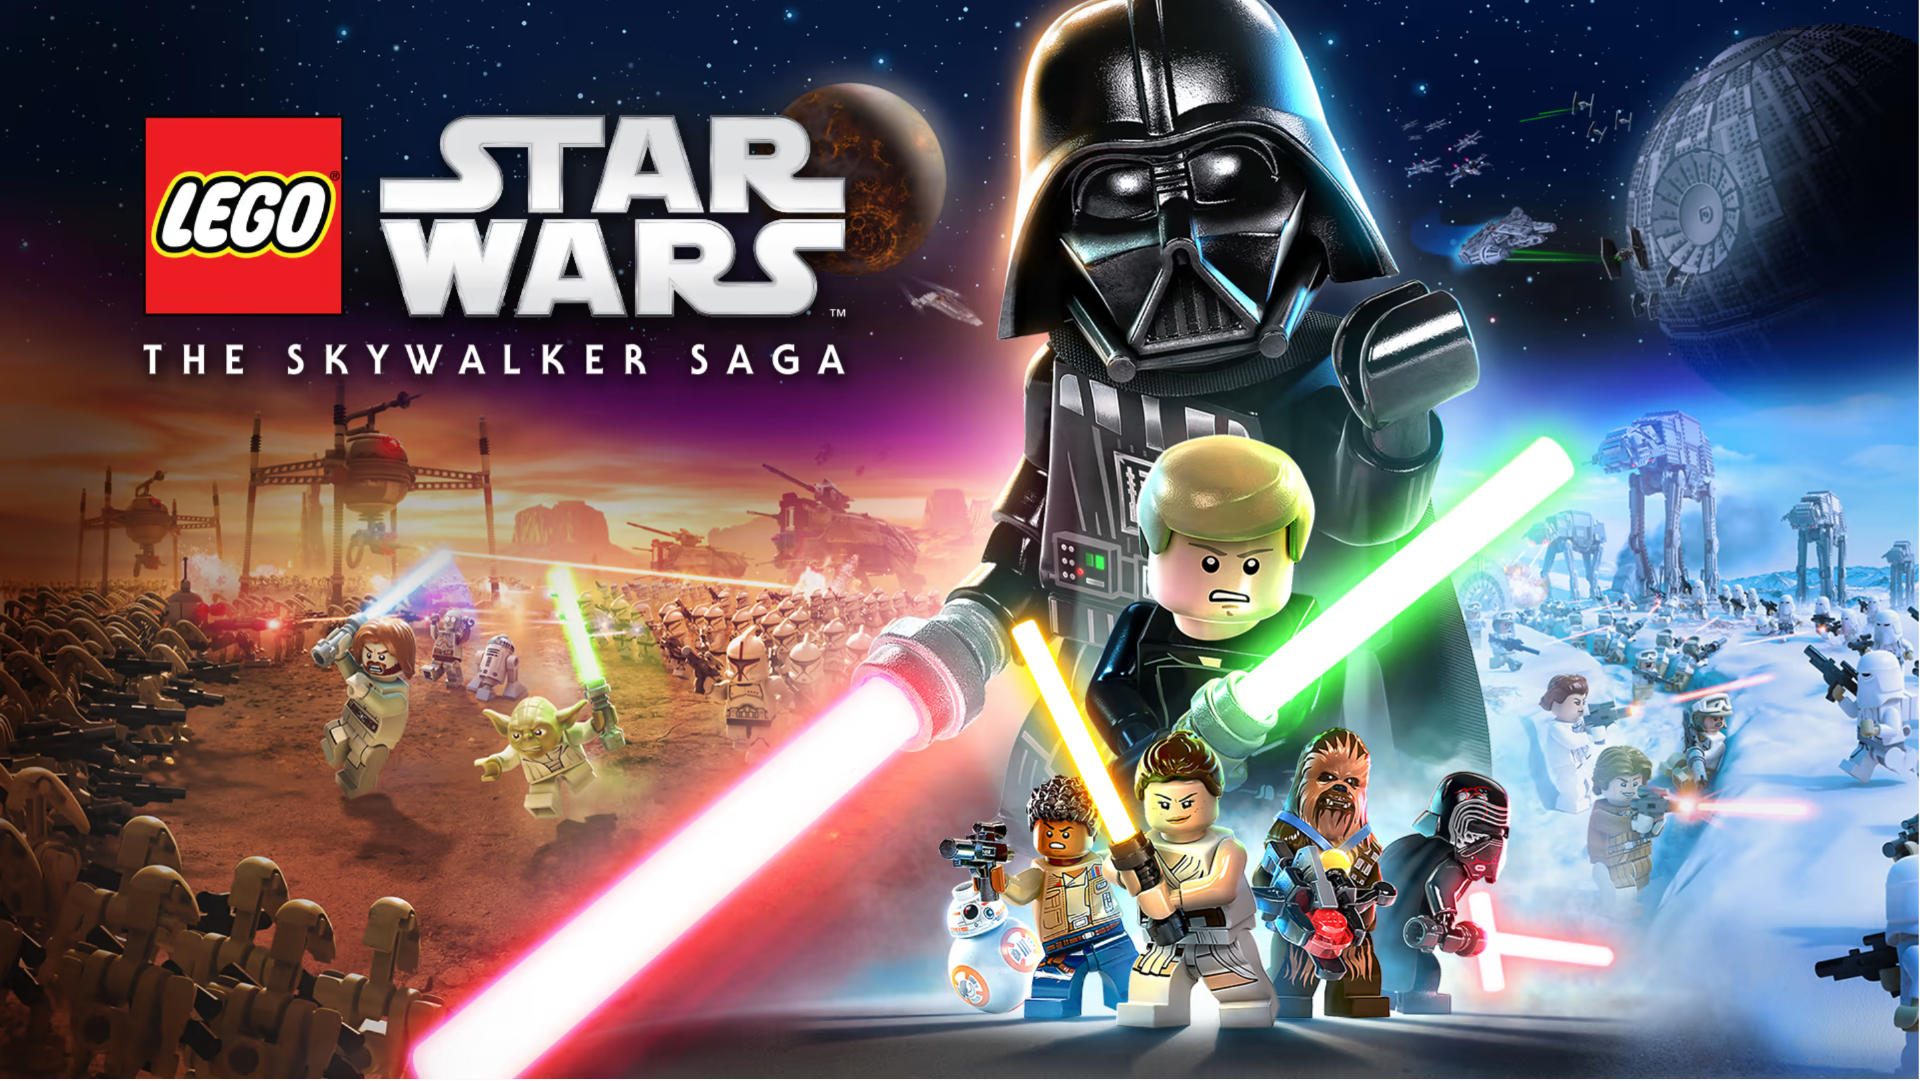 Promo art featuring Darth Vader, Luke Skywalker, and more in Lego Star Wars: The Skywalker Saga.